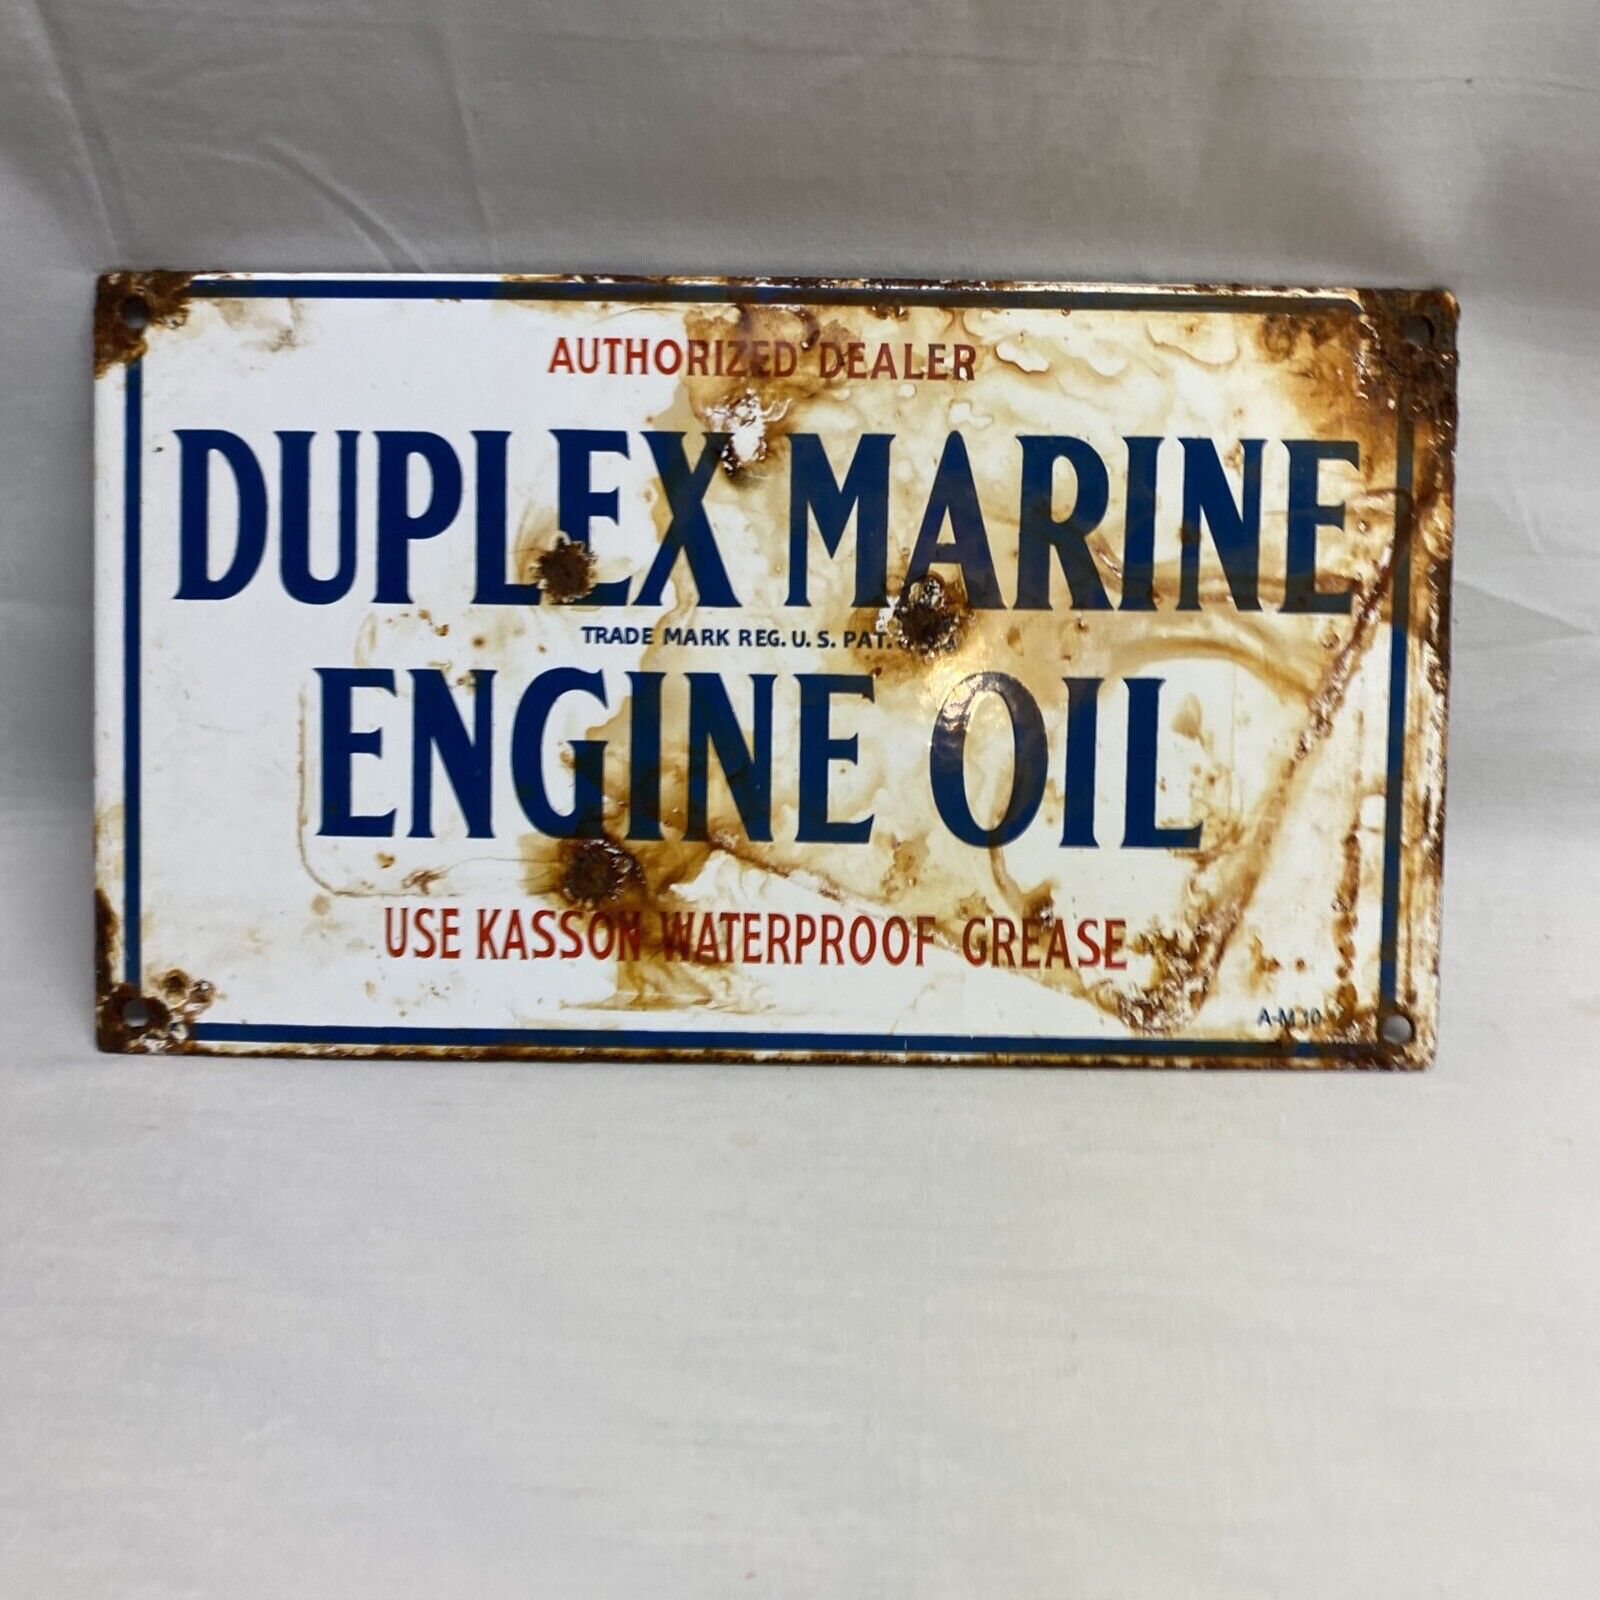 DUPLEX MARINE PORCELAIN VINTAGE STYLE SIGN CAR GAS TRUCK GASOLINE OIL